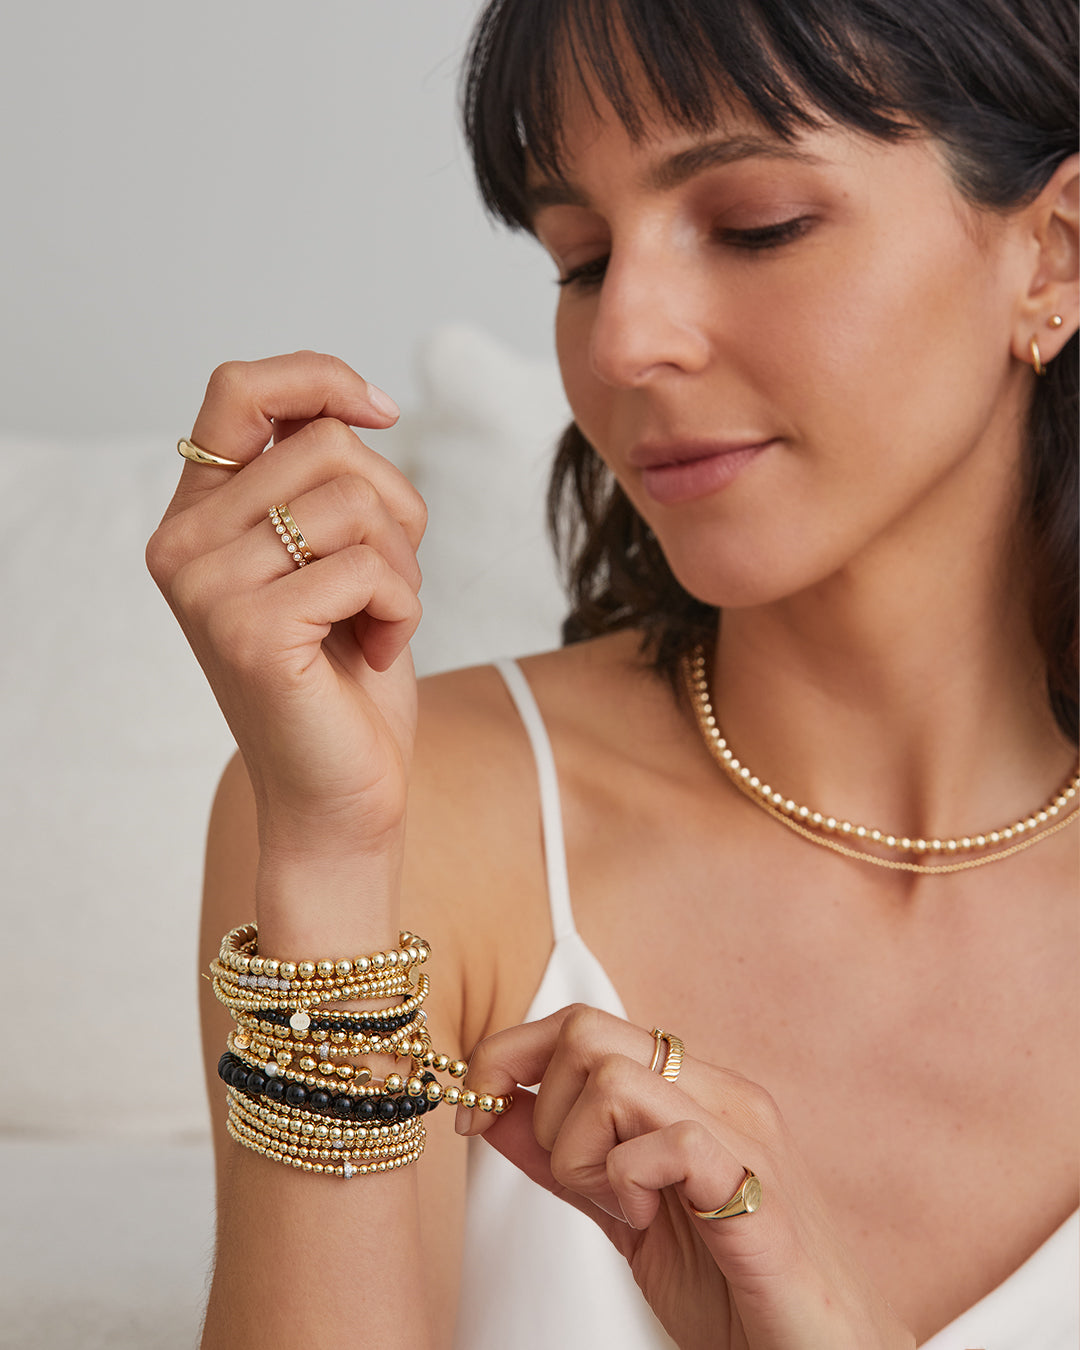 3mm Gold Segment Bead Bracelet with Diamond Bars